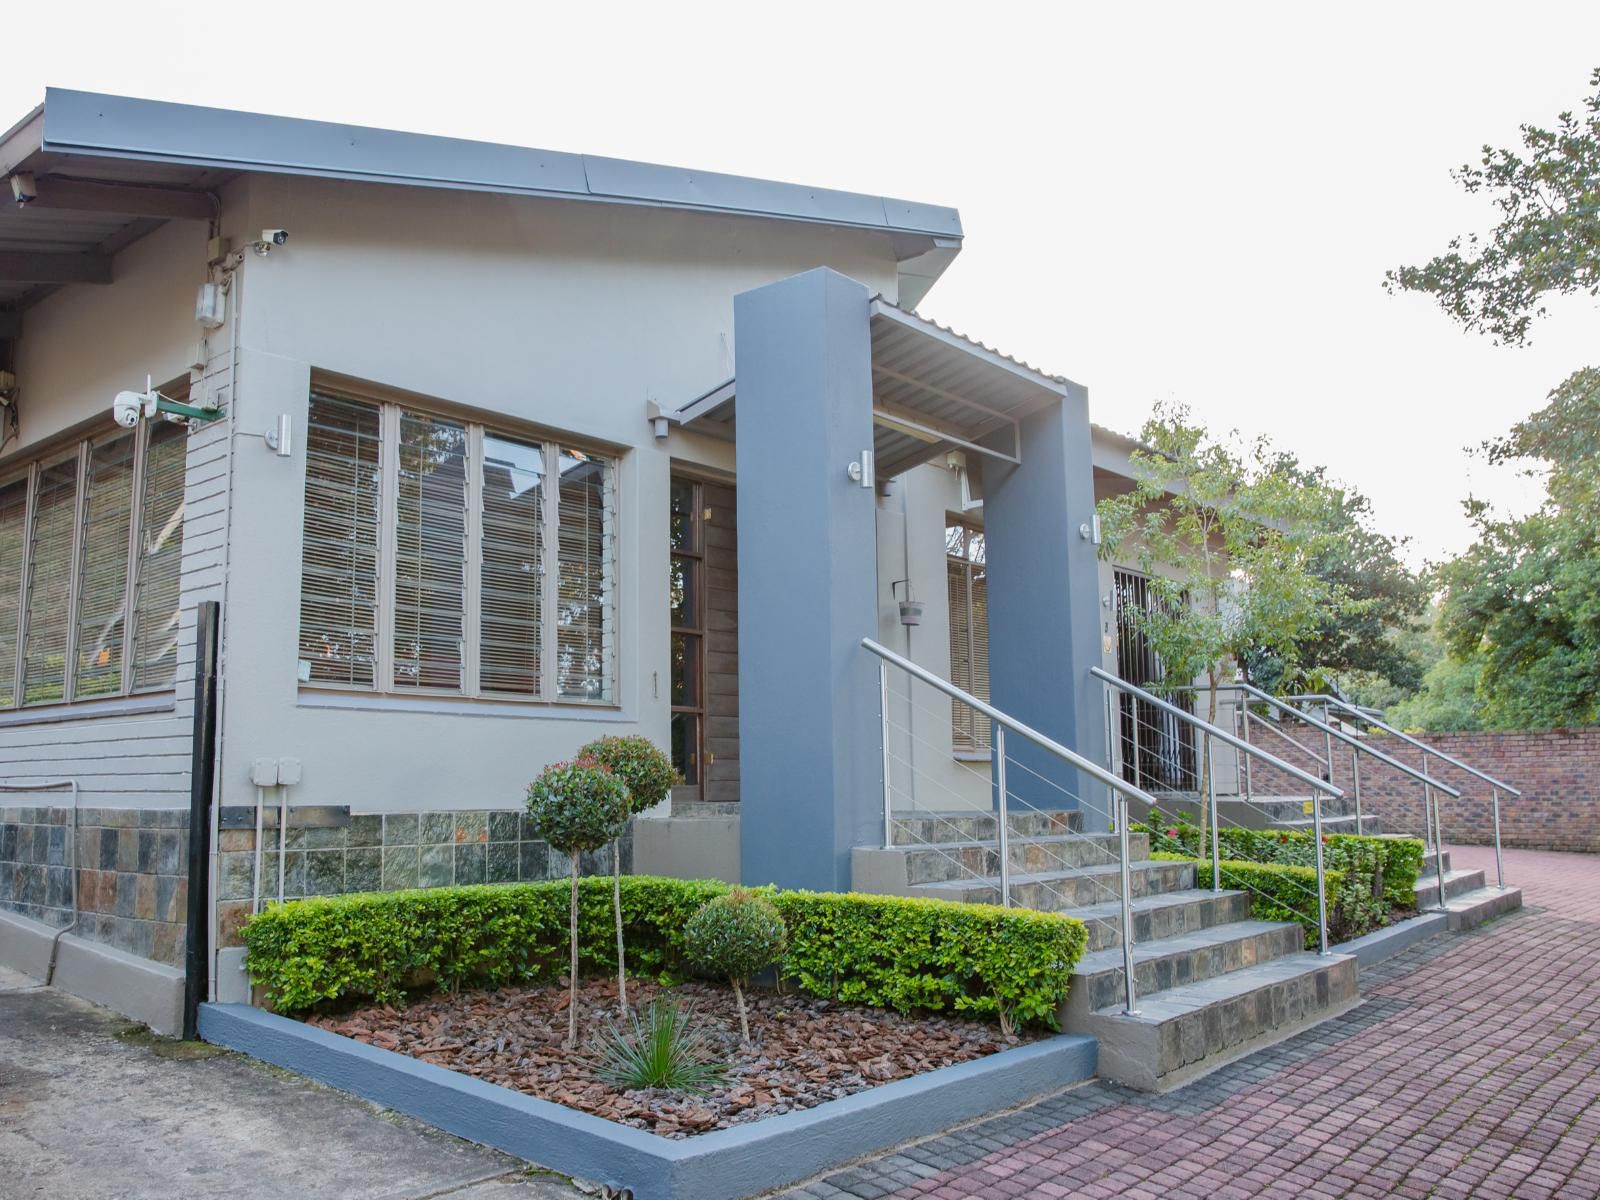 85 Ehmke Nelspruit Mpumalanga South Africa House, Building, Architecture